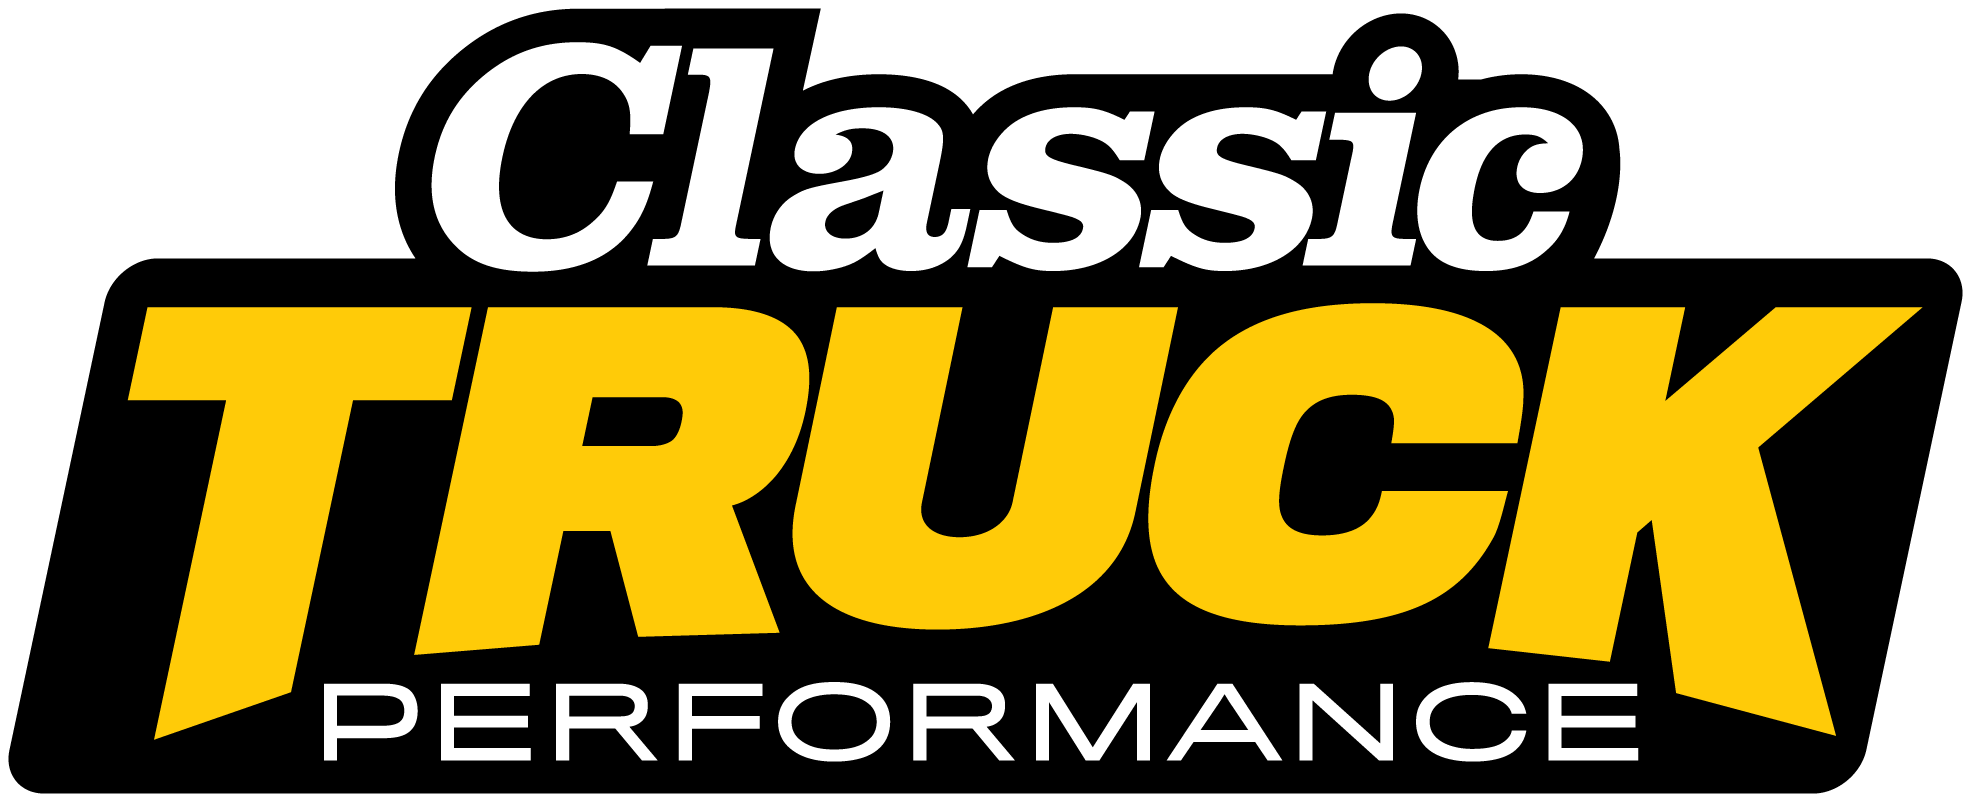 Classic Truck Performance logo